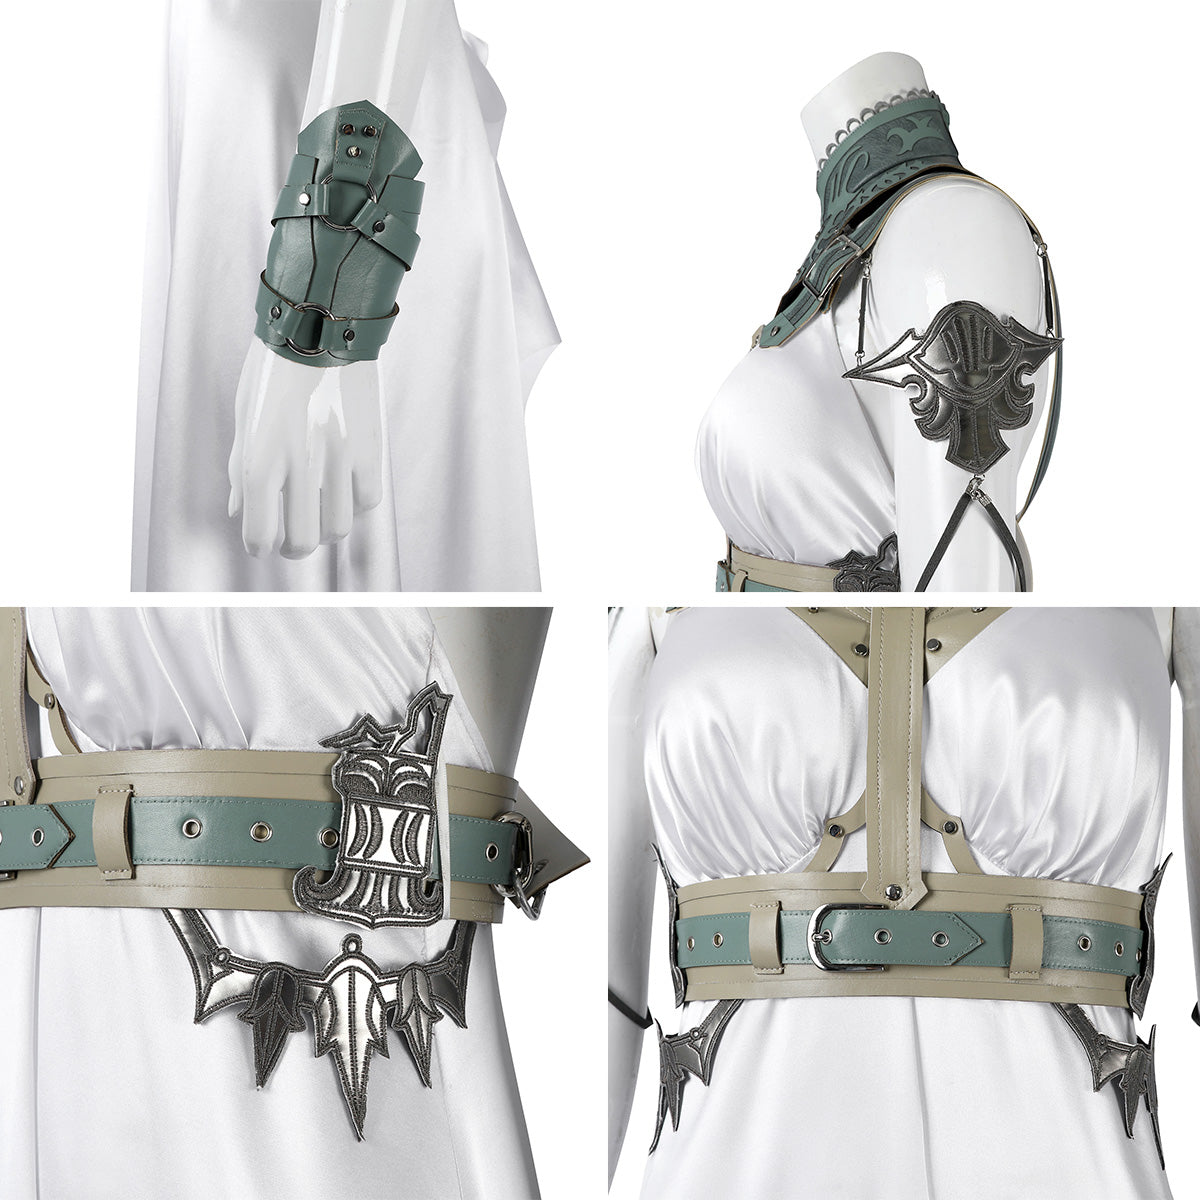 Final Fantasy VII Rebirth FF7R Tifa Lockhart Gold Saucer Dress Cosplay Costume